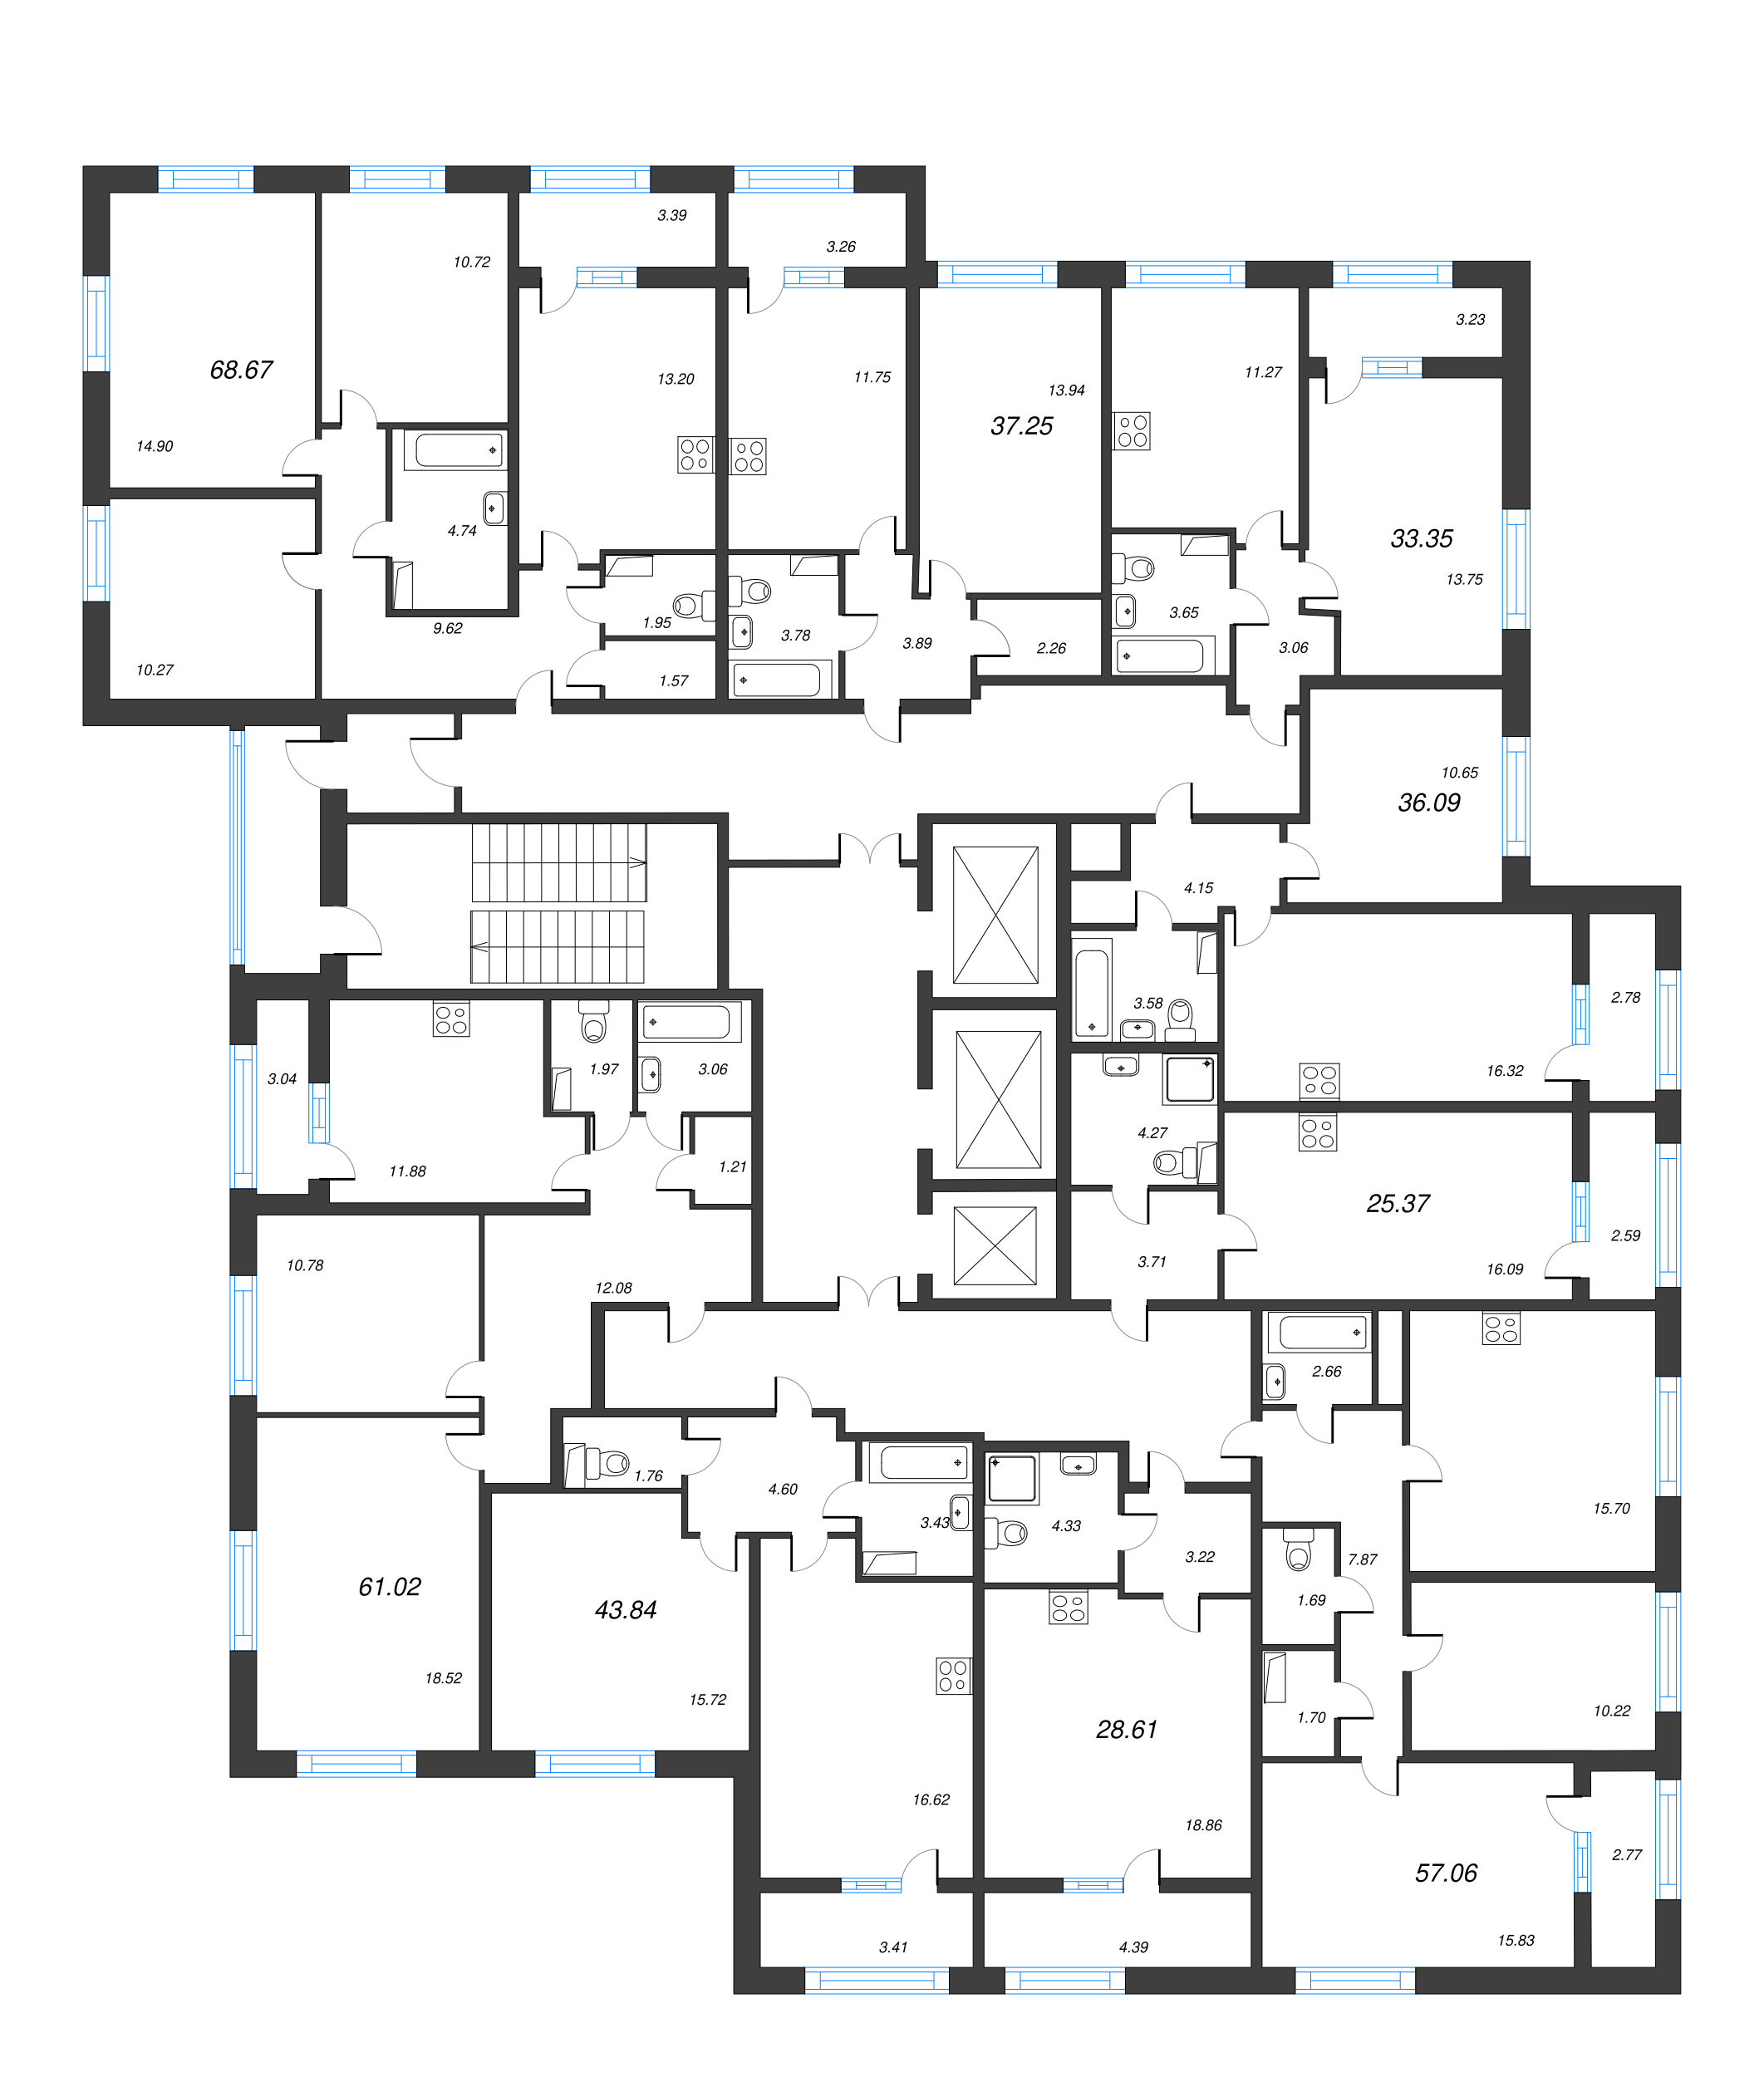 2-комнатная квартира, 61.02 м² в ЖК "БелАрт" - планировка этажа